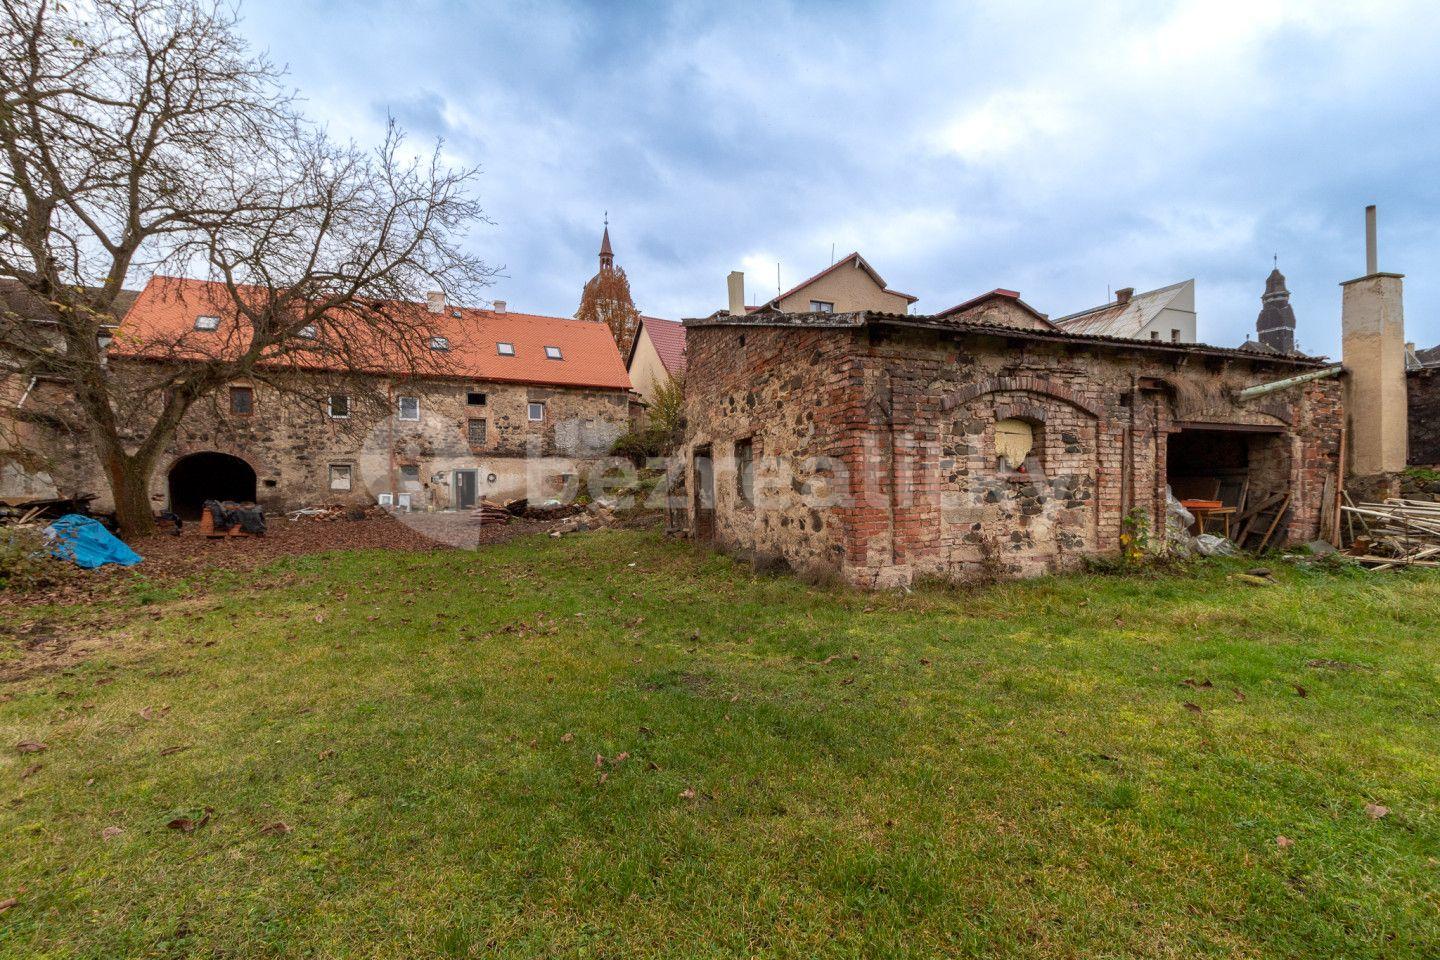 house for sale, 360 m², Husovo náměstí, Chabařovice, Ústecký Region